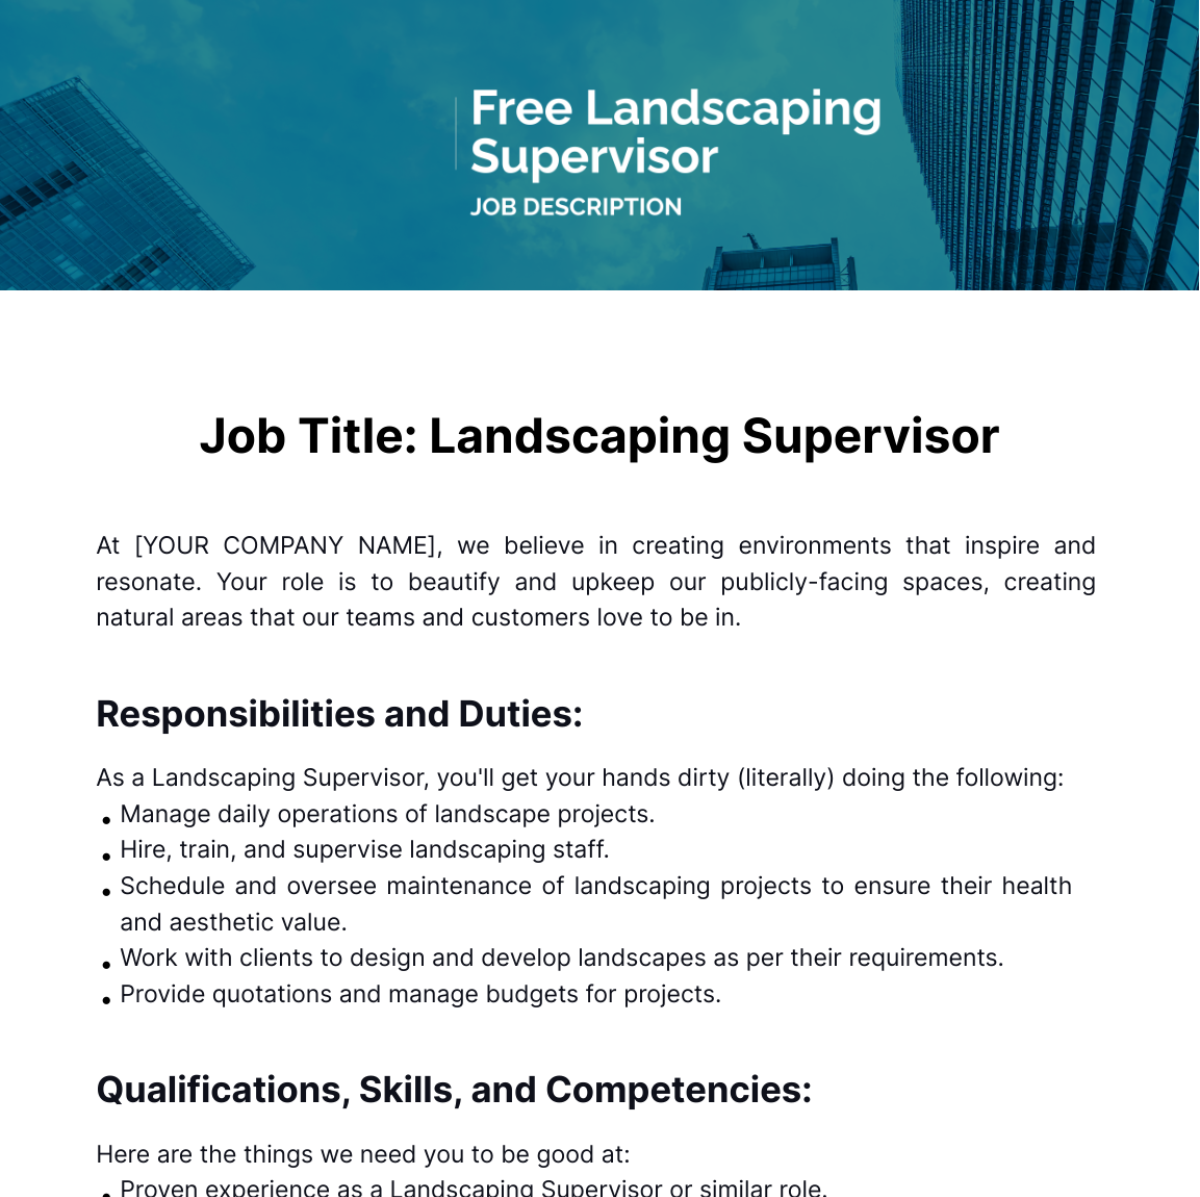 Free Landscaping Supervisor Job Description Template